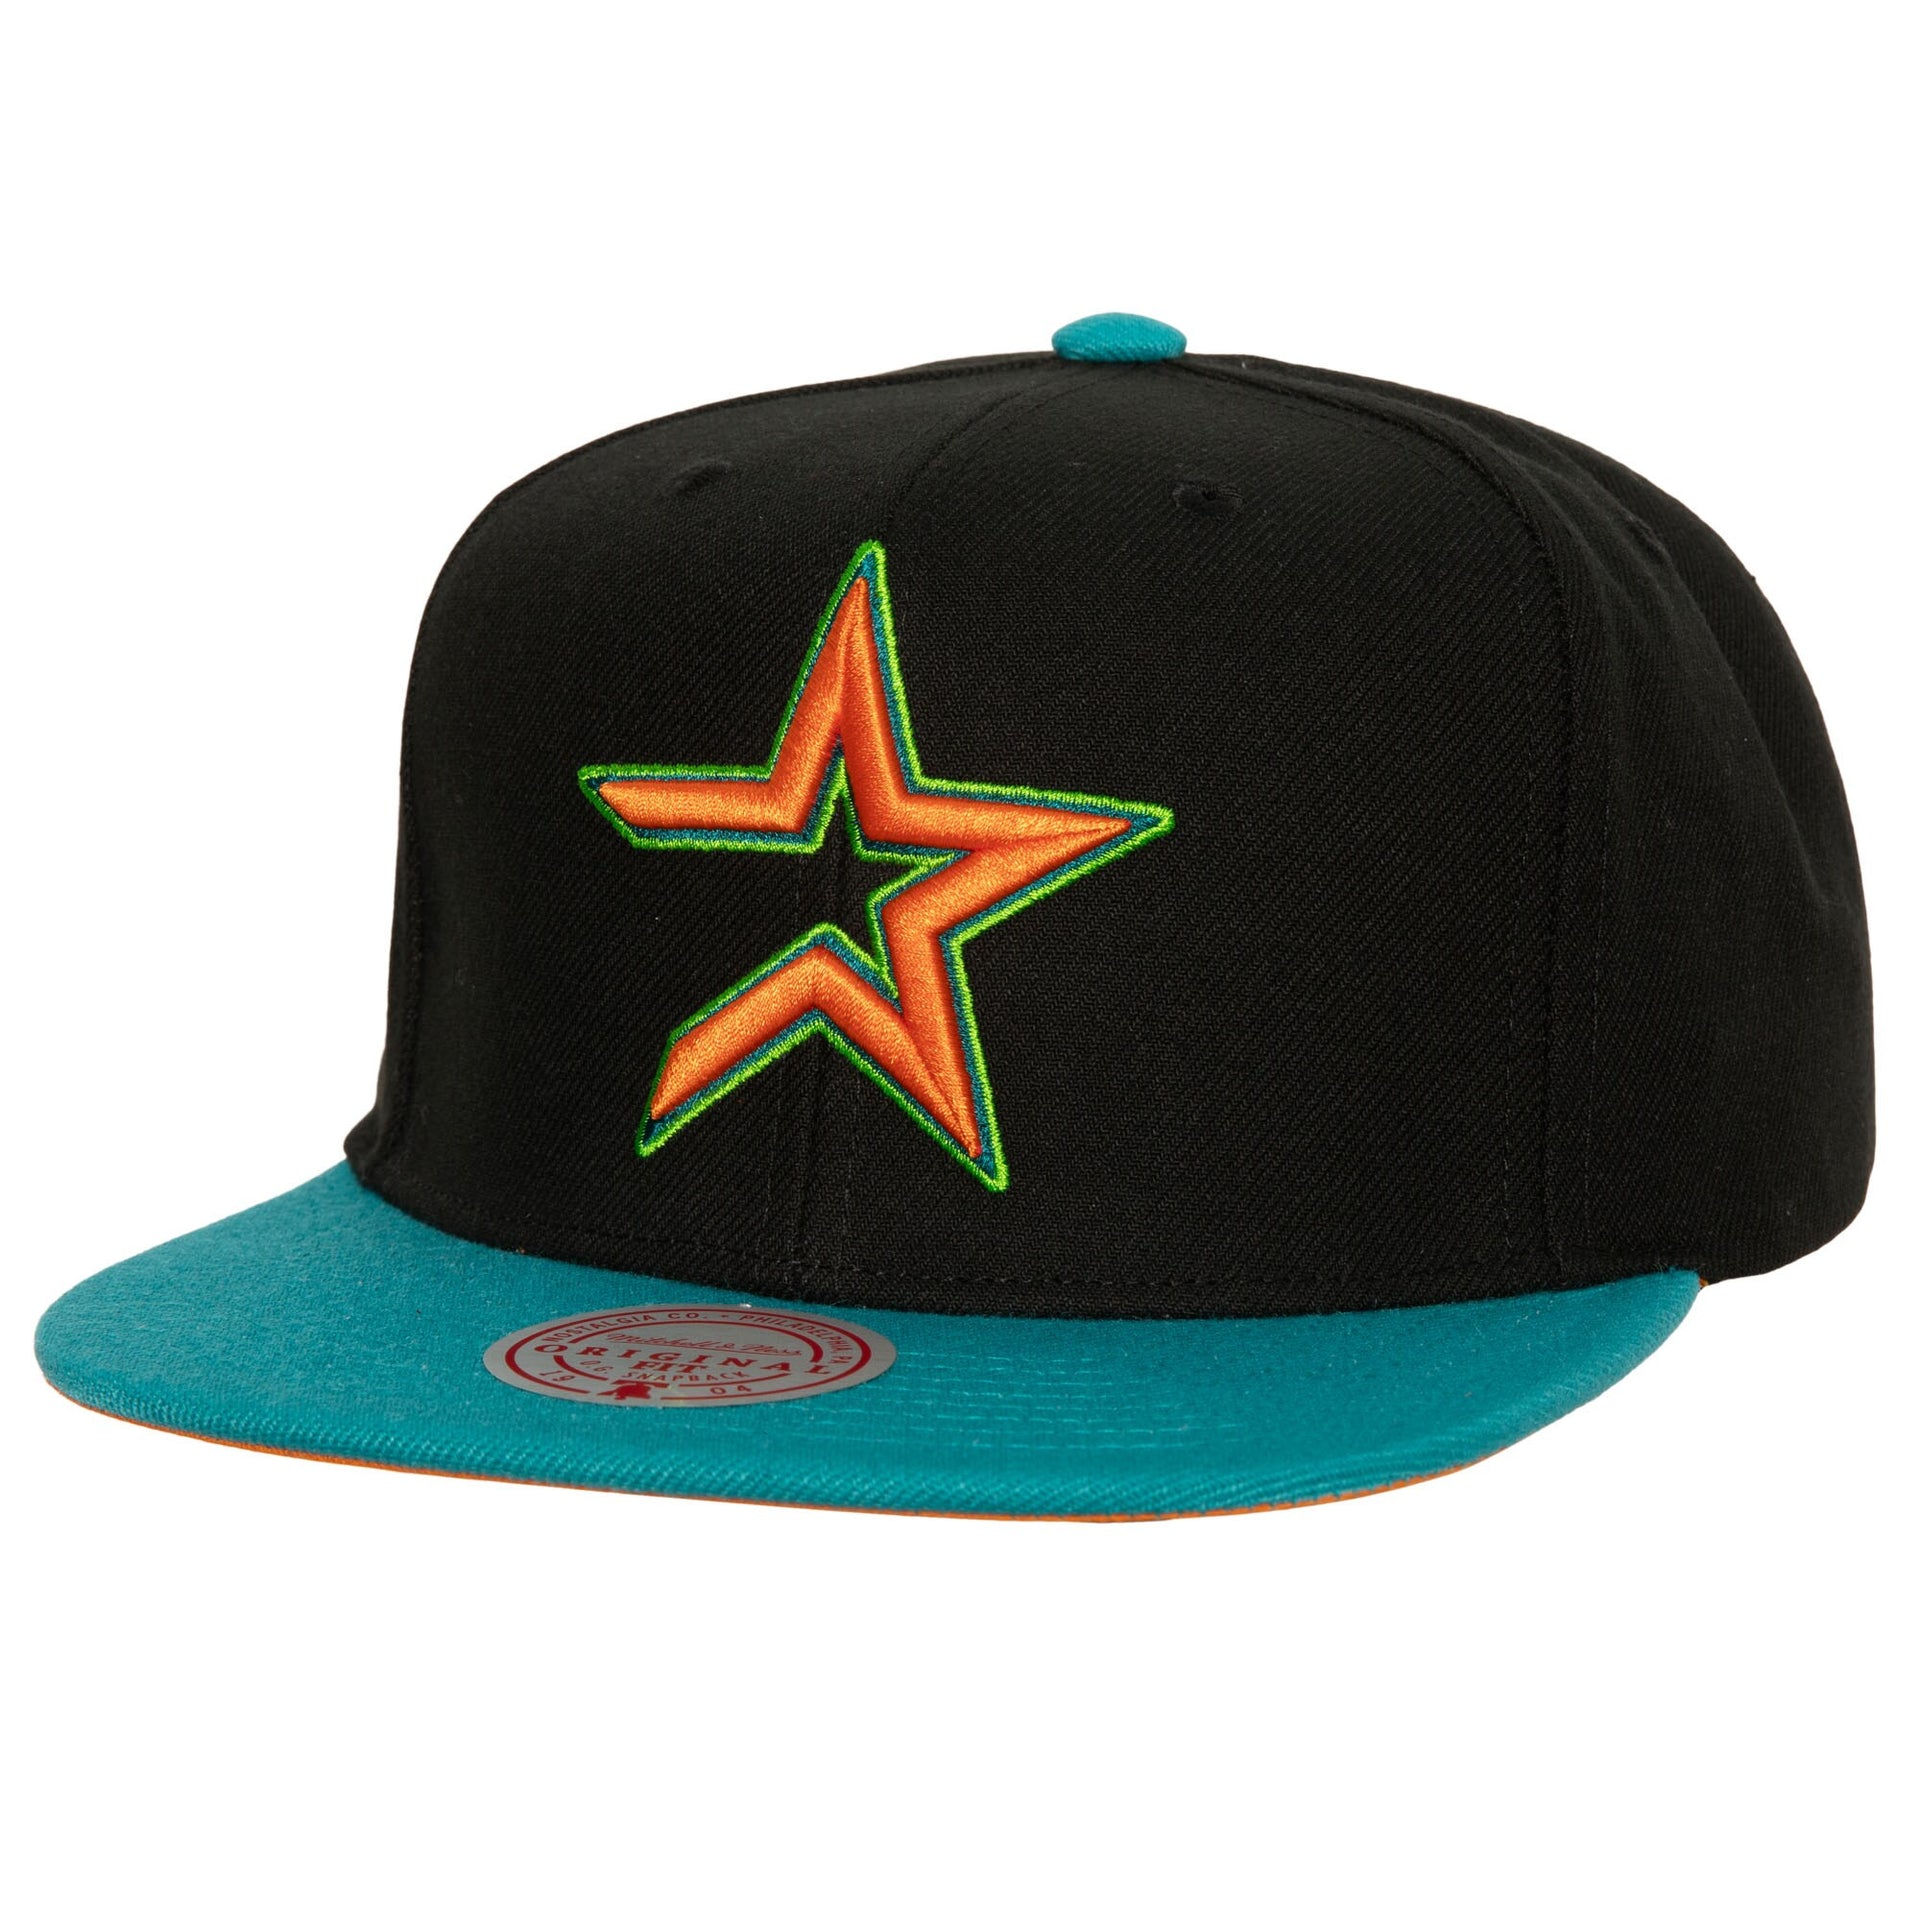 Men's Mitchell & Ness Black/Teal Oakland Athletics Citrus Cooler Snapback Hat